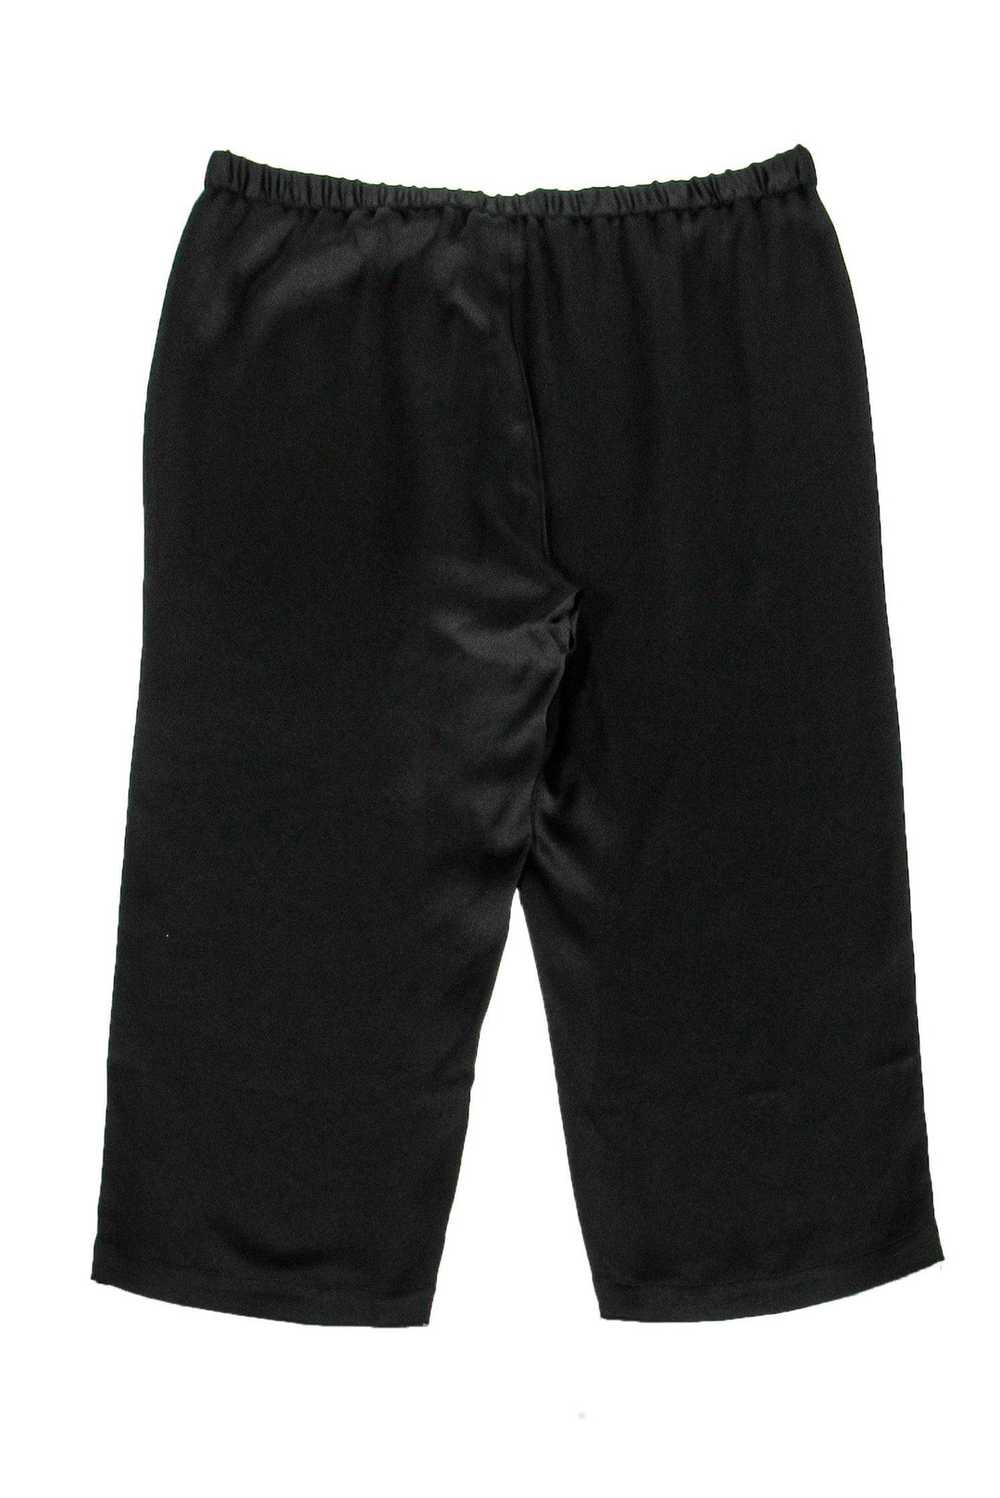 Eileen Fisher - Black Silk Cropped Pants Sz PL - image 2